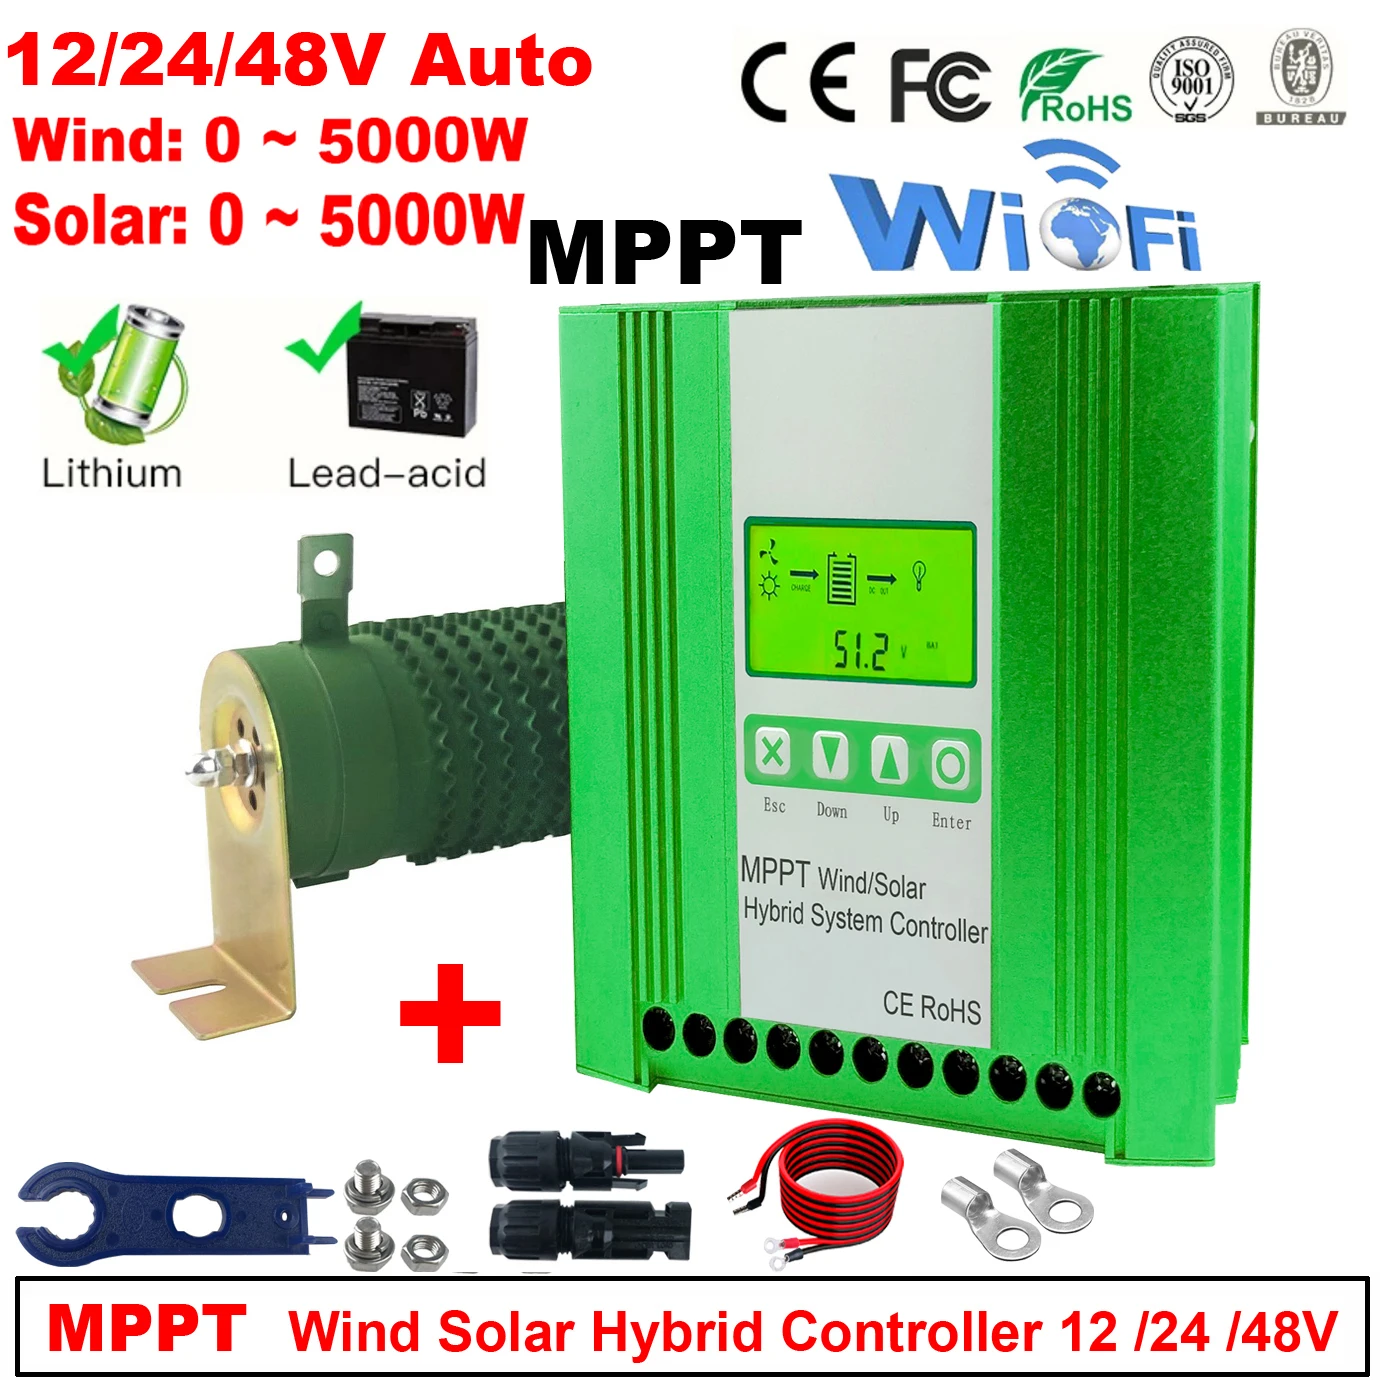 

12V 24V 48V 4000W 5000W 6000W 8KW 10KW MPPT Hybrid Wind Solar Charge Controller Regulator WIFI For Home Wind Solar Power System